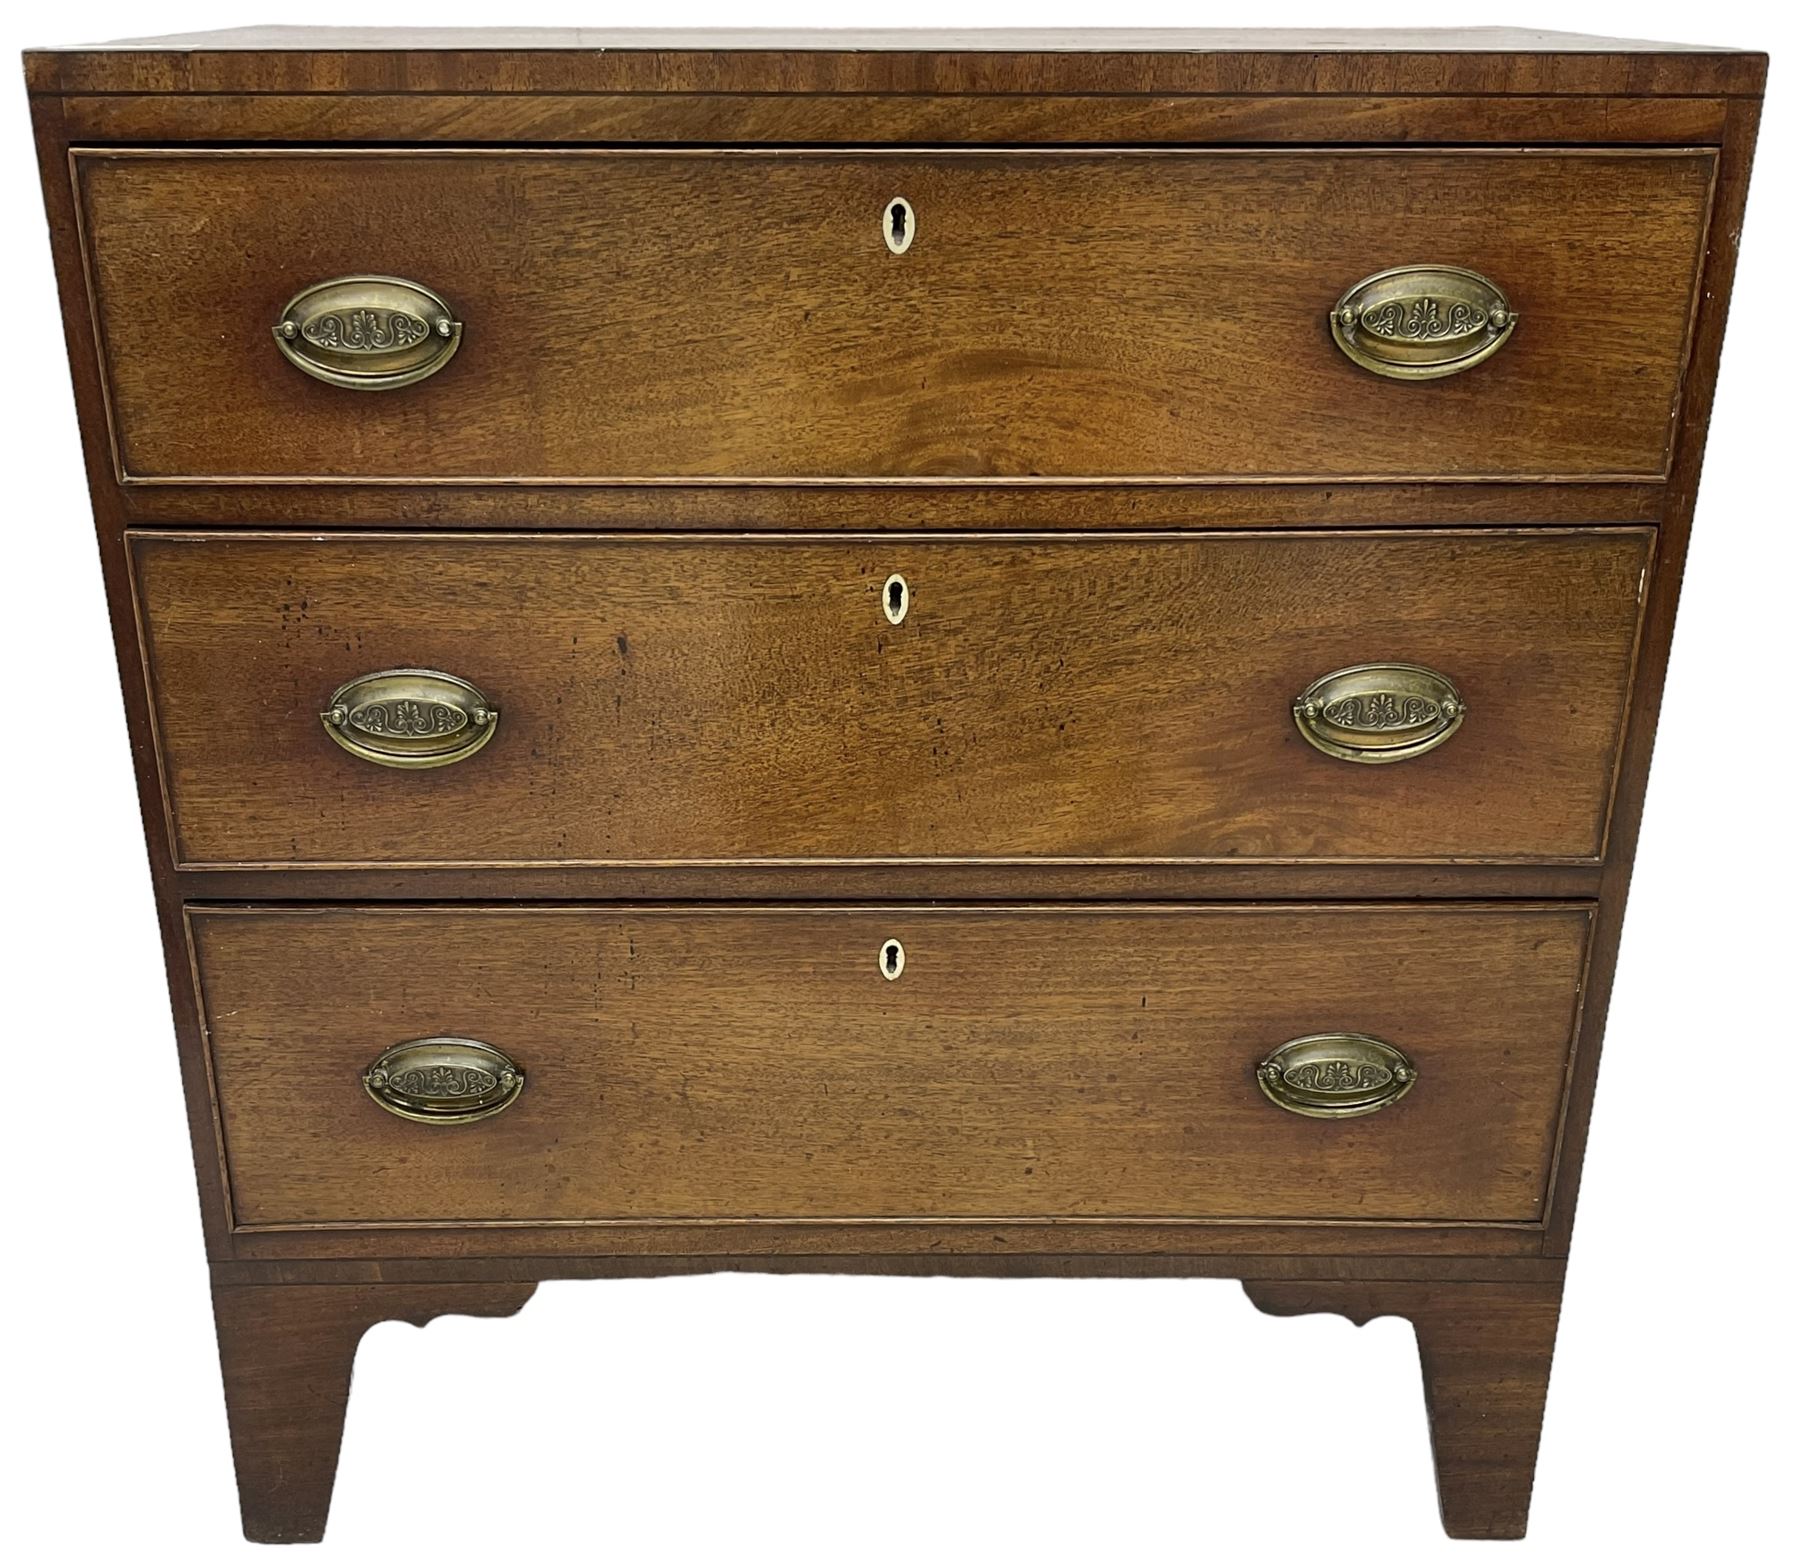 Regency mahogany chest - Image 3 of 6